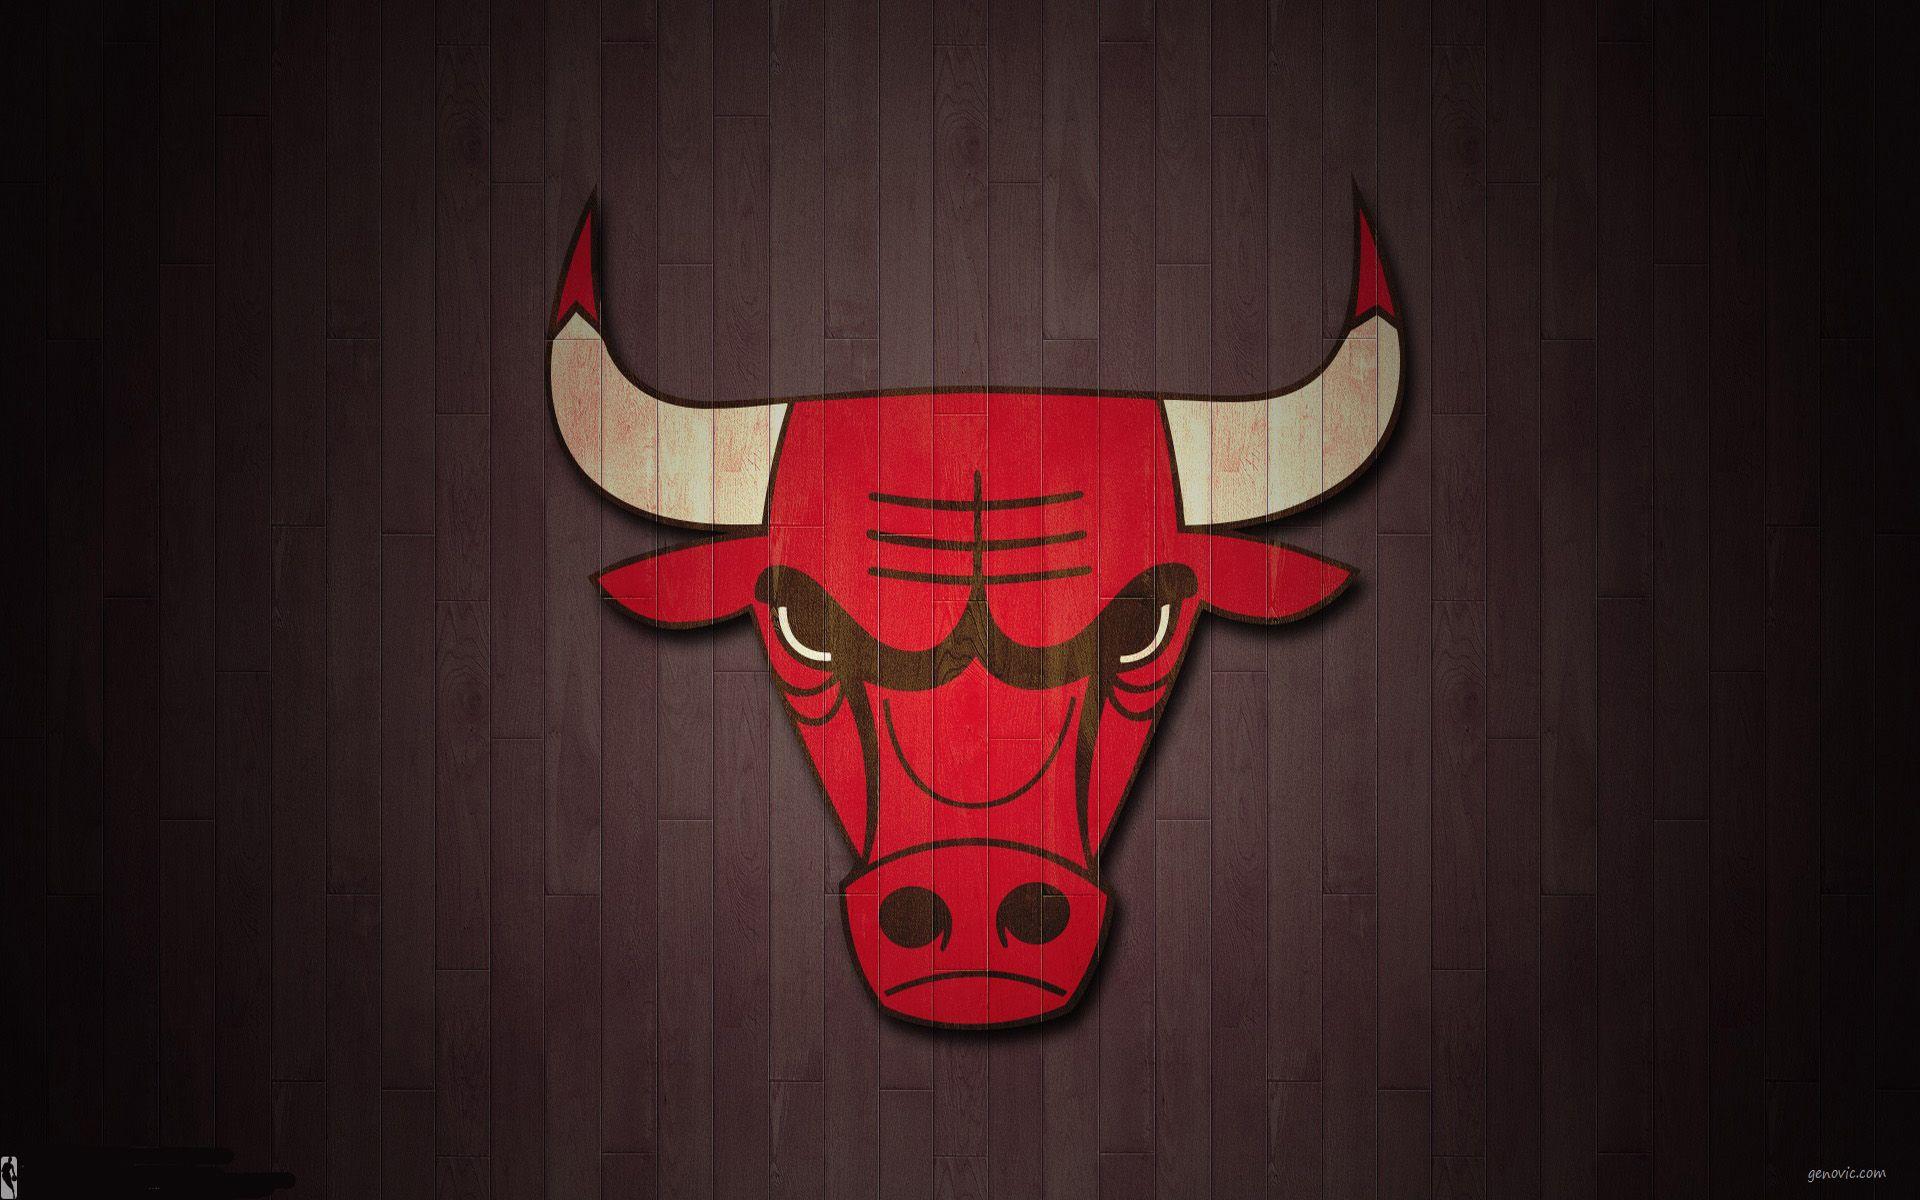 Cool HD Logo - Chicago Bulls Logo Wallpaper HD, NBA Cool Wallpapers 1920x1200